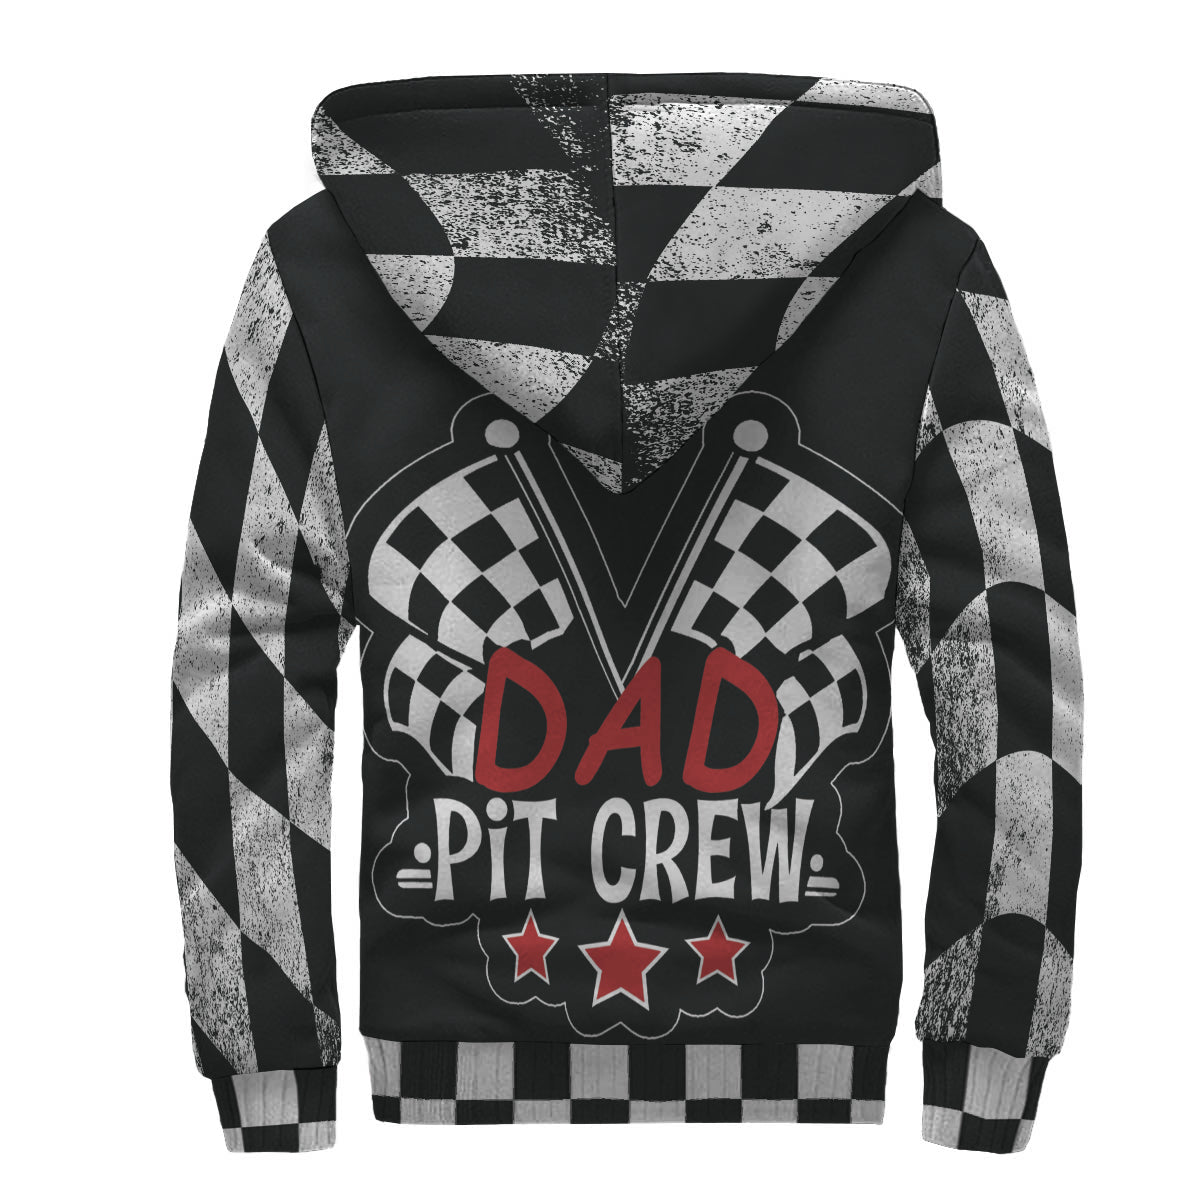 racing dad jacket